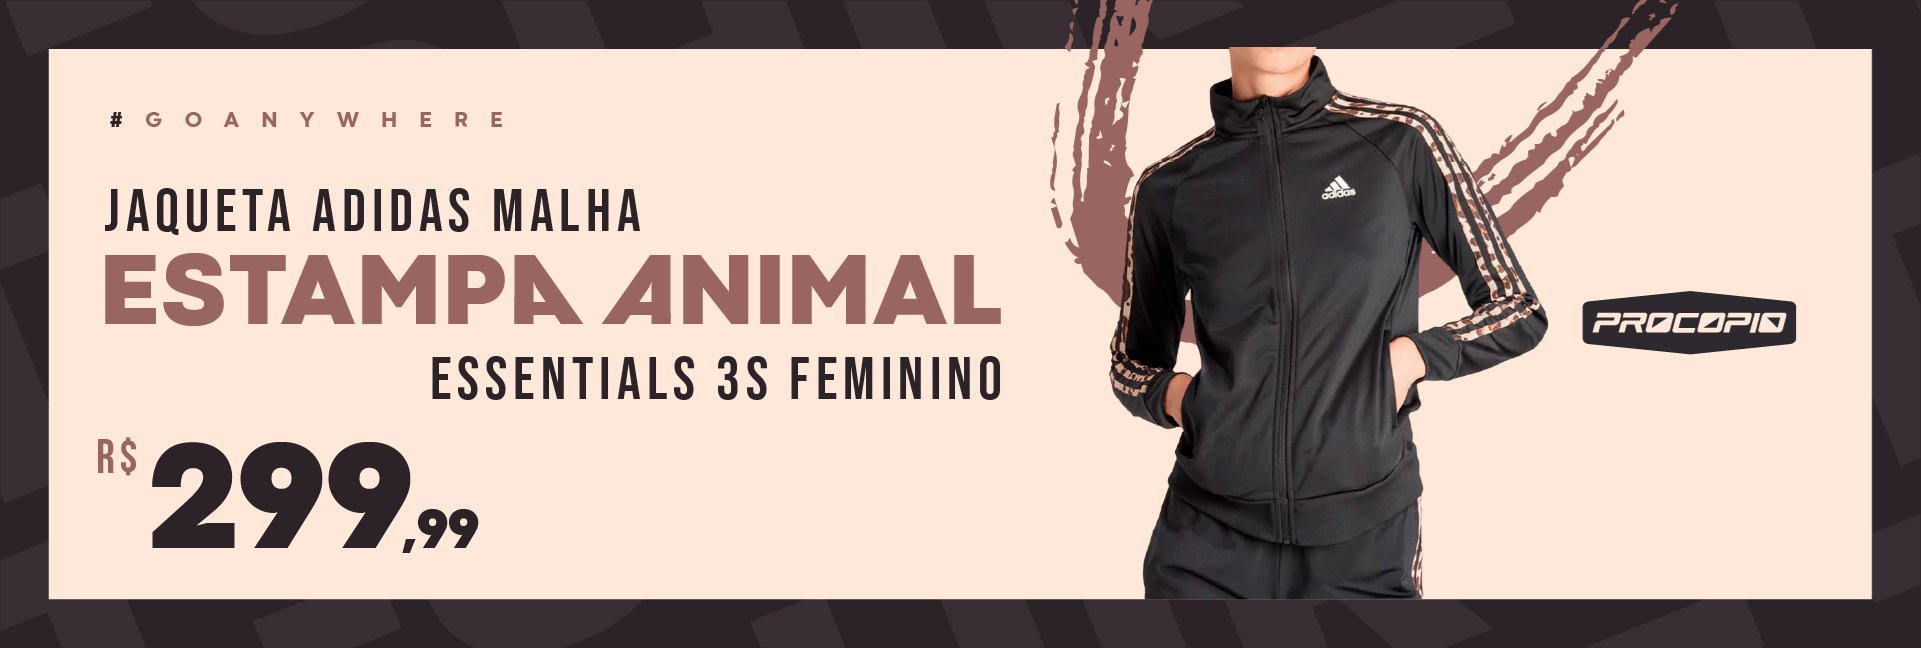 Jaqueta adidas Malha Estampa Animal Essentials 3S